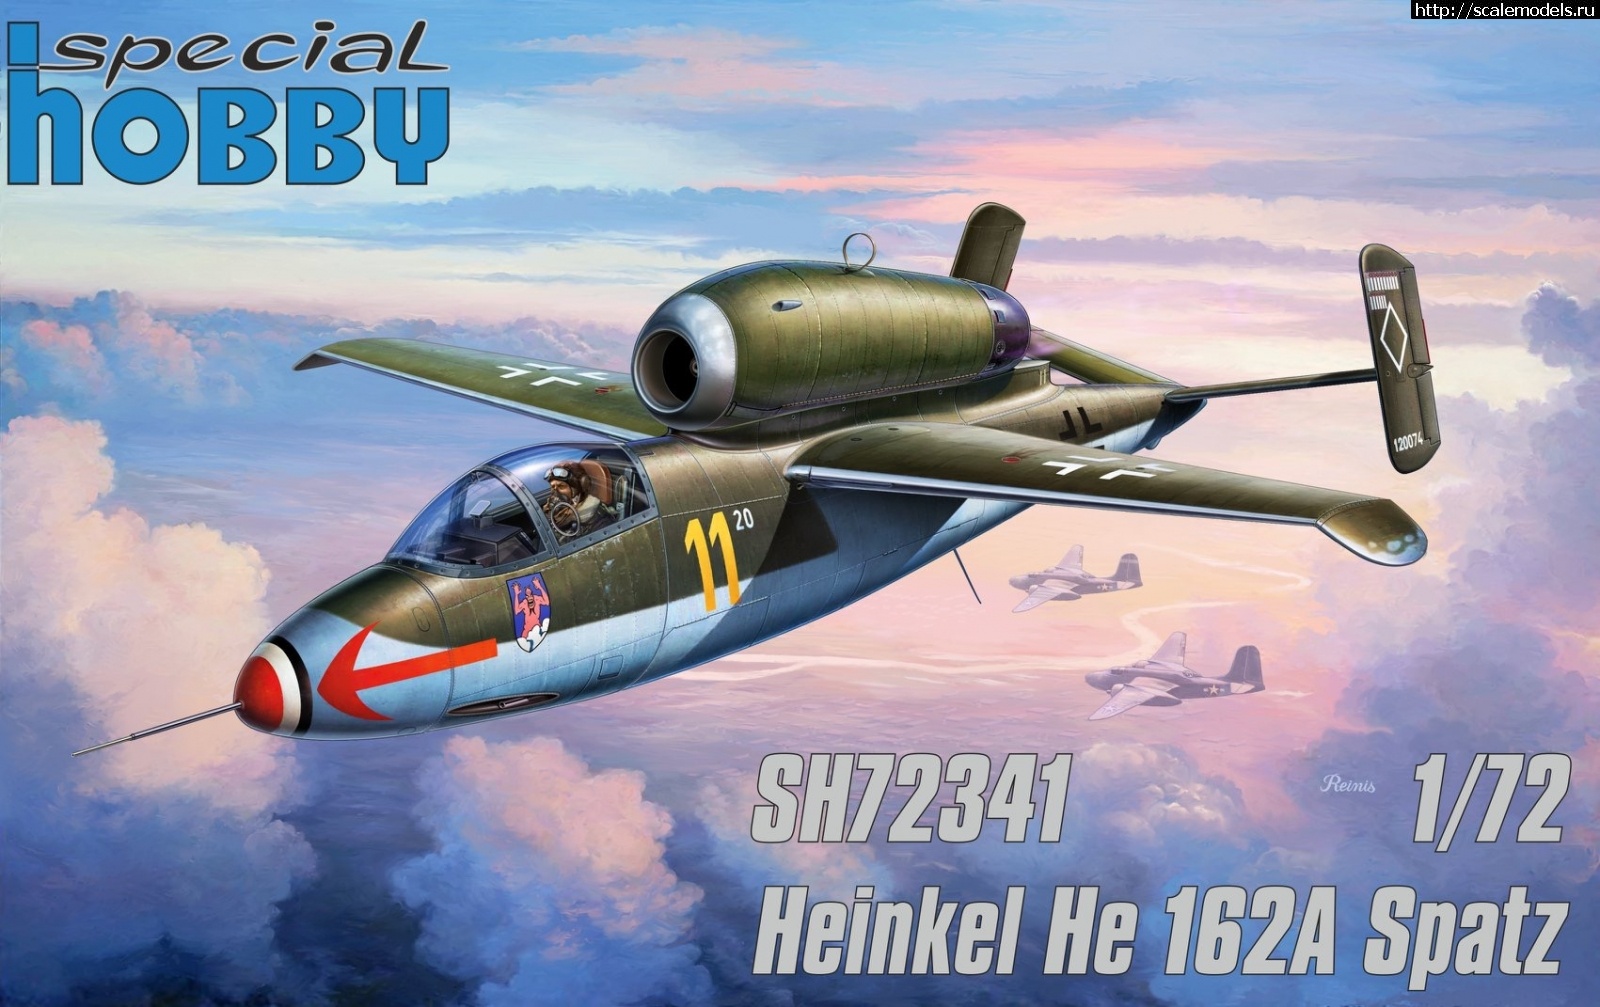 1579848644_069DAB23-6B78-4228-B9AB-2C94DFBD4286.jpeg :  Special Hobby 1/72 Heinkel He 162A Spatz - 3D-  